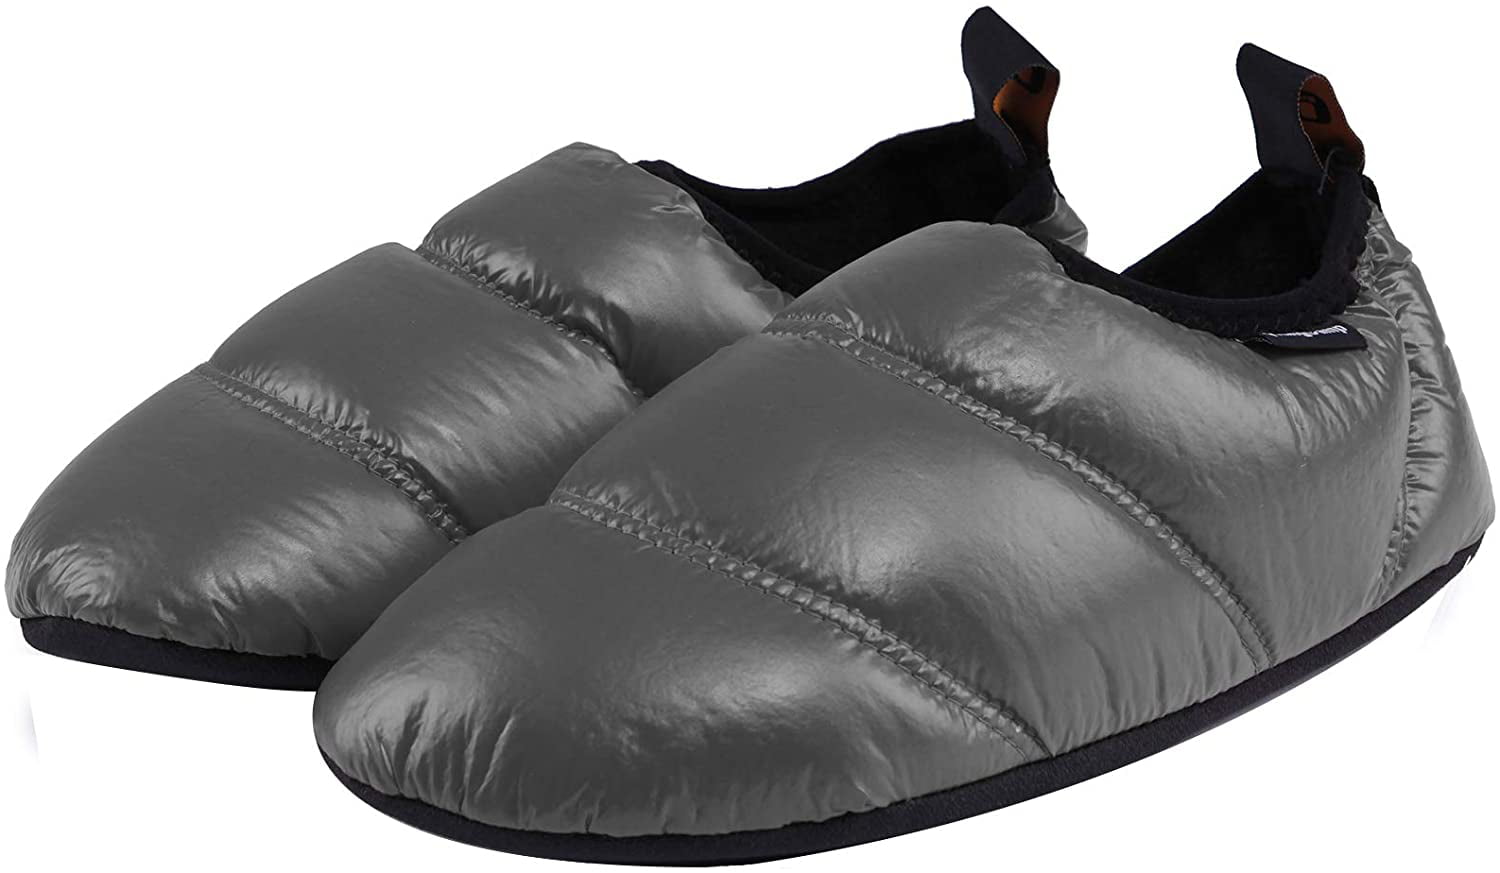 Unisex Warm Camping Slippers Booties Non-slip Indoor Outdoor Winter Camp Shoes 